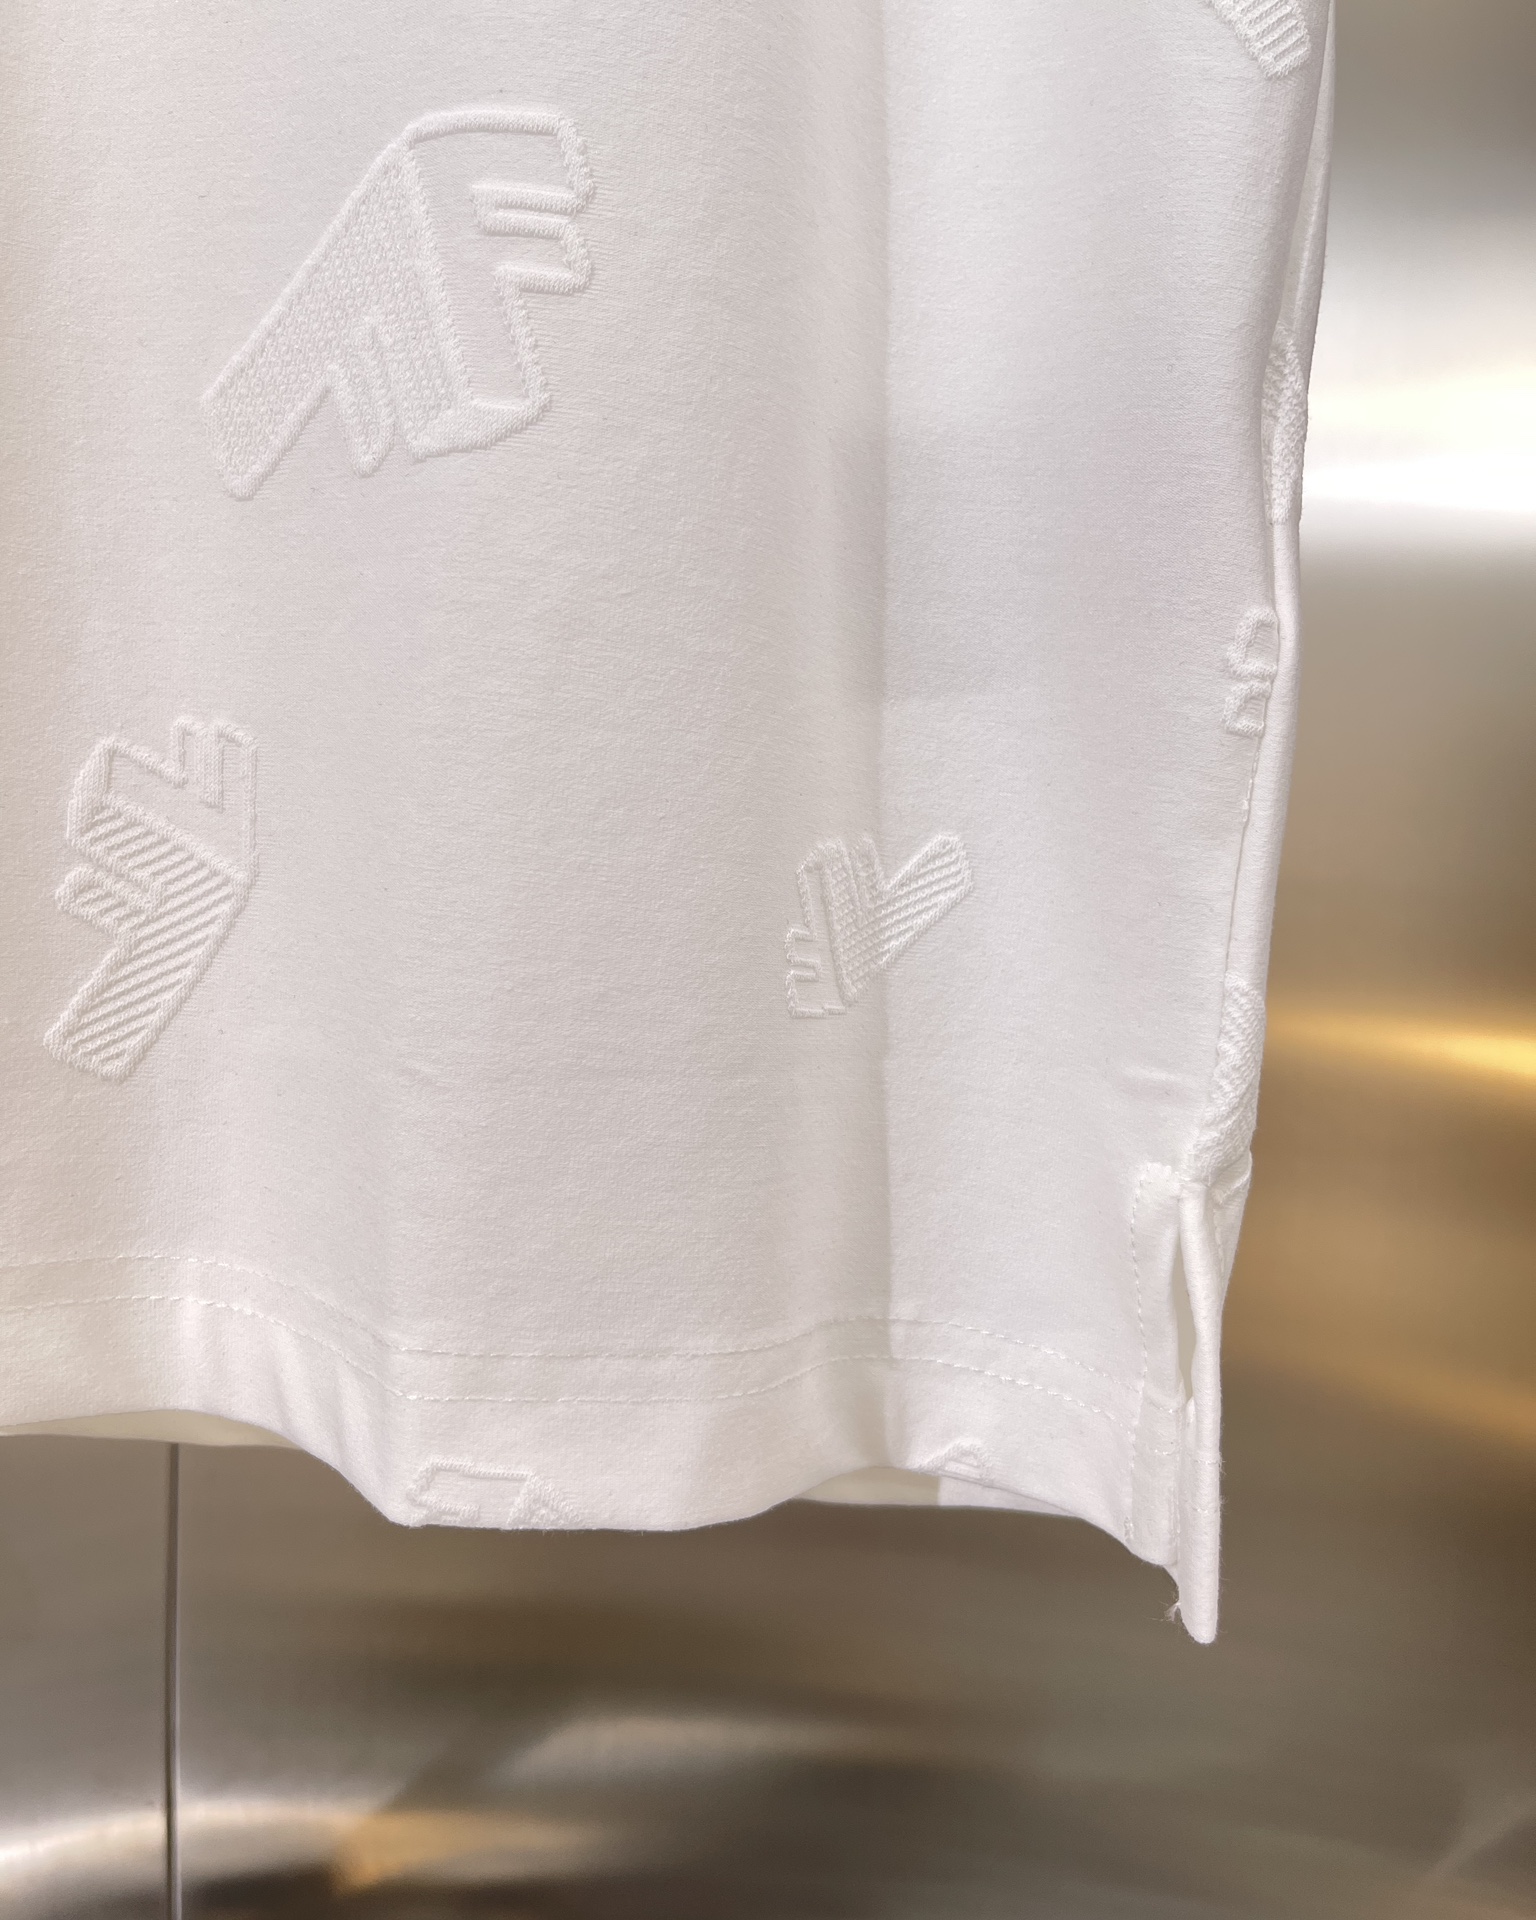 Fendi芬迪款式男款短袖T恤衫T-shirt100支双移圈提花面料全套丝光针数是目前移圈提花针数最高的